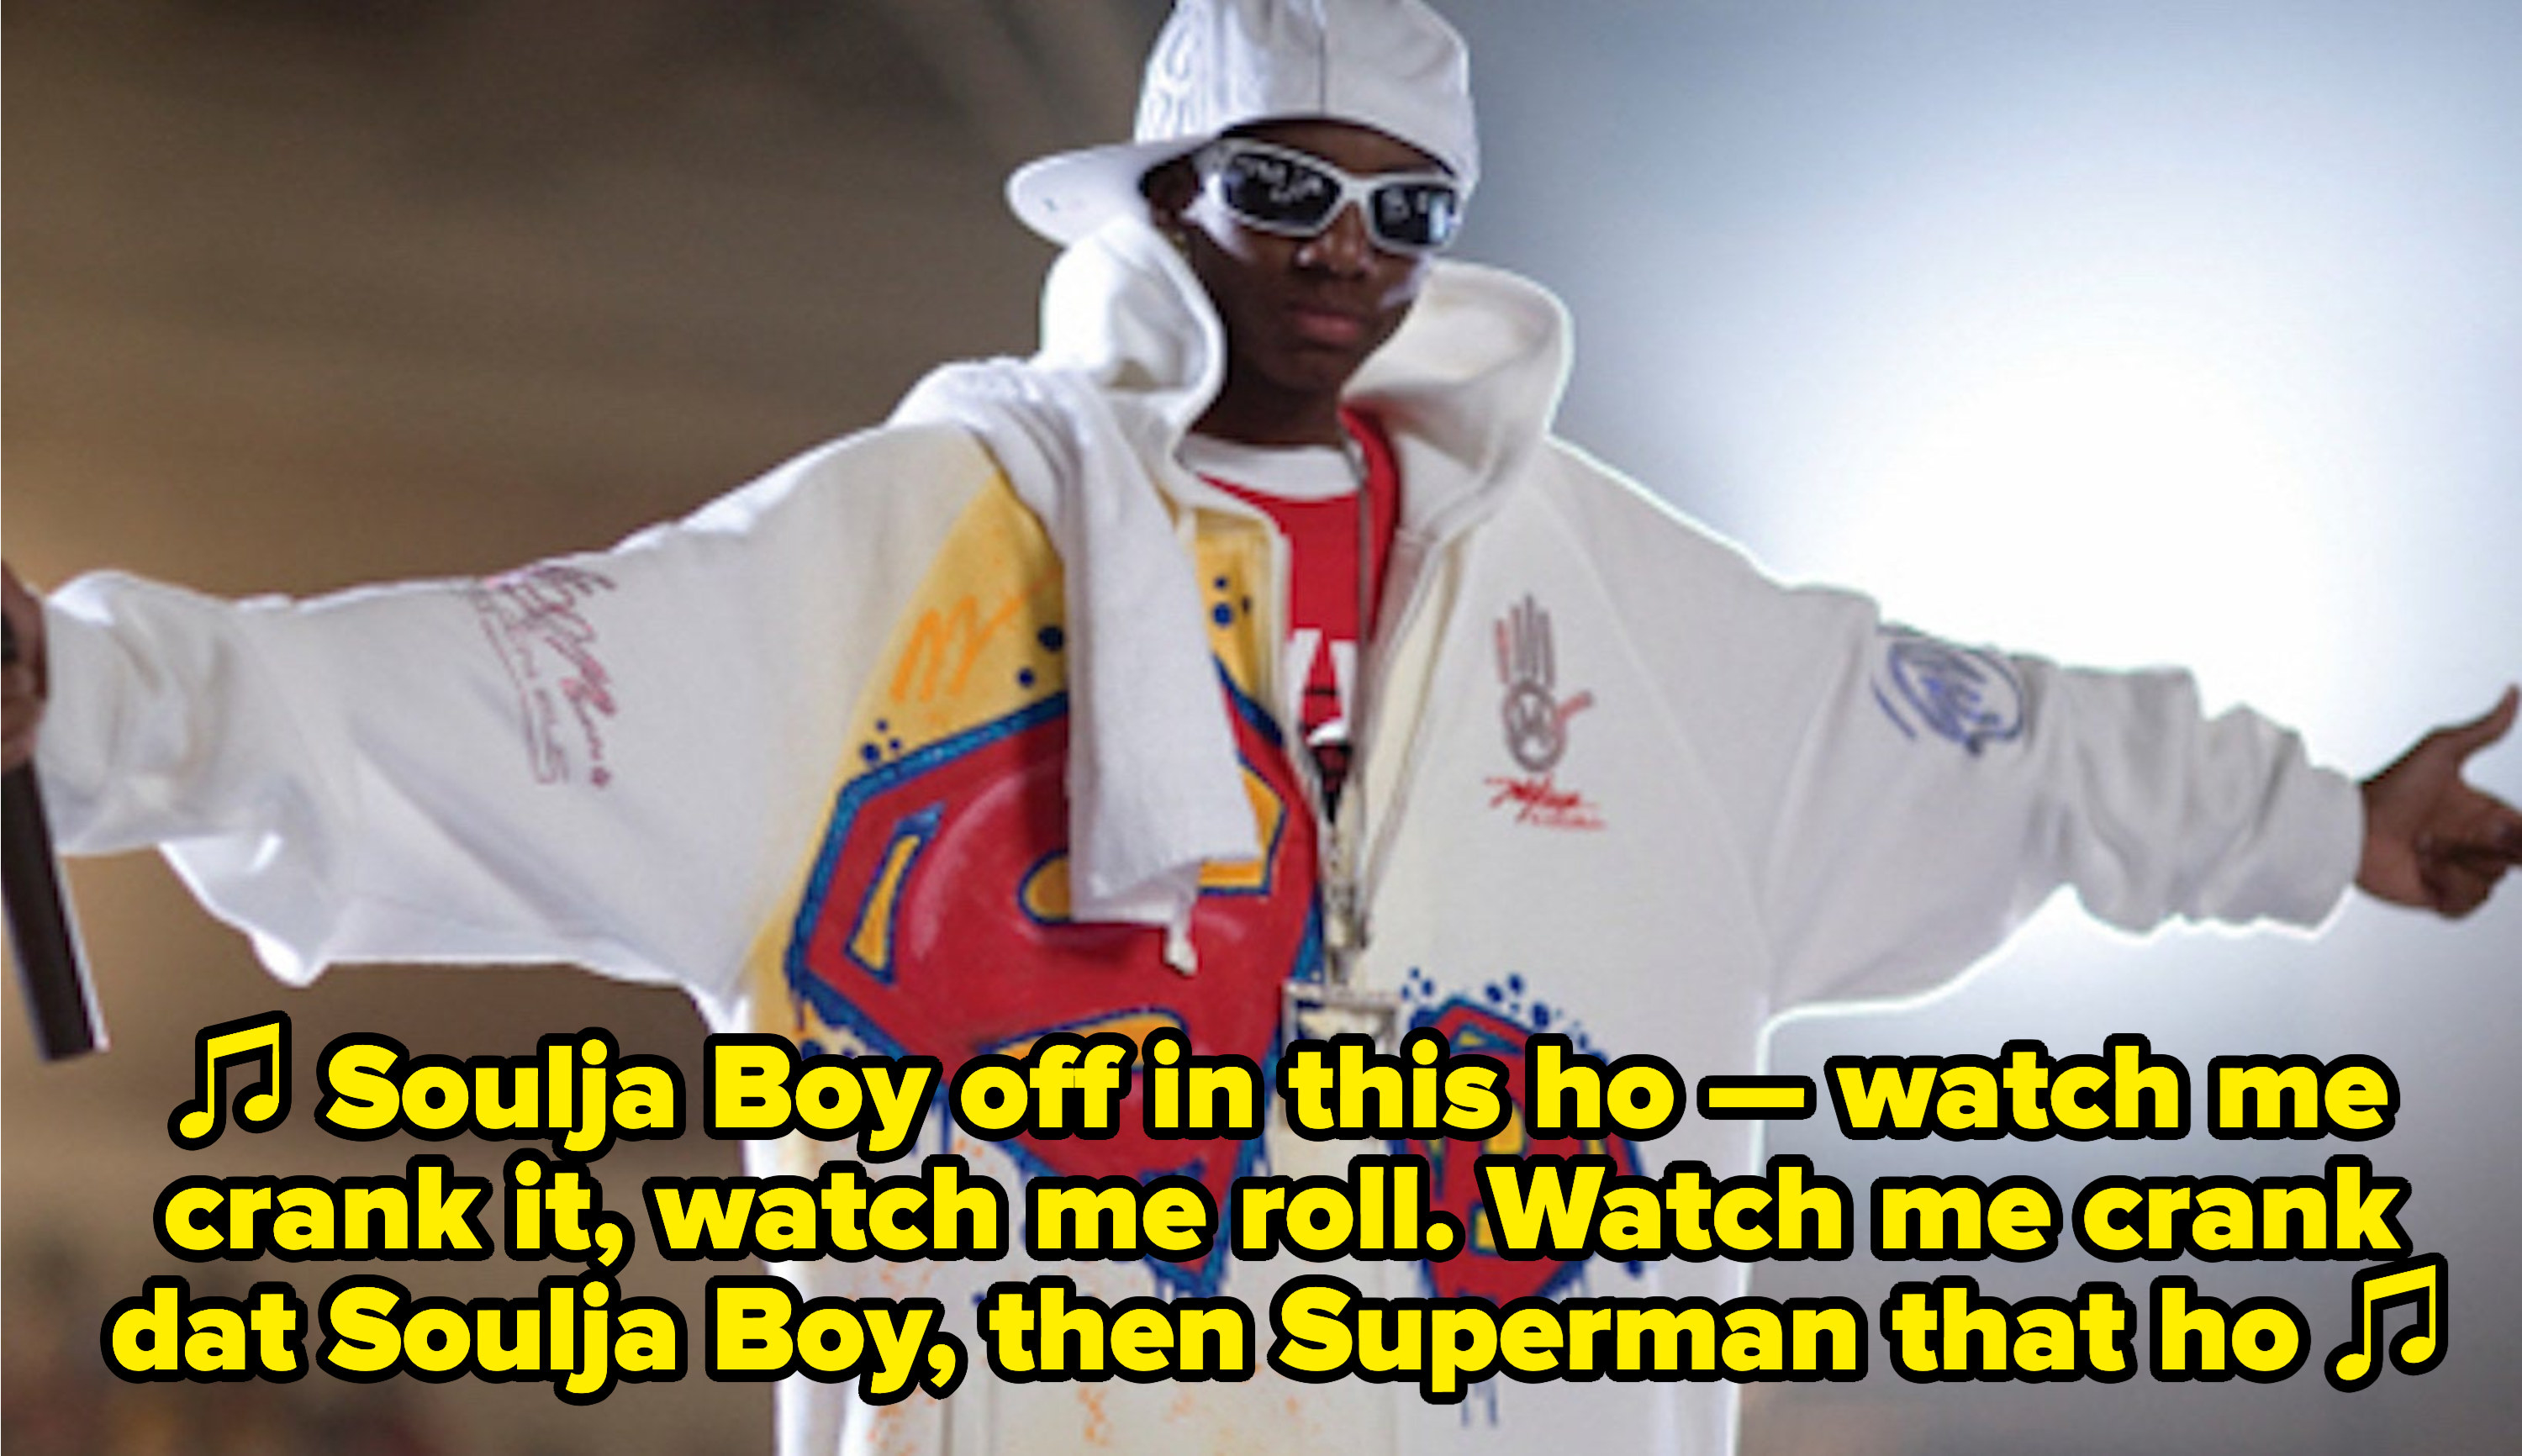 Soulja Boy rapping: &quot;Soulja Boy off in this ho — watch me crank it, watch me roll. Watch me crank dat Soulja Boy, then Superman that ho&quot;